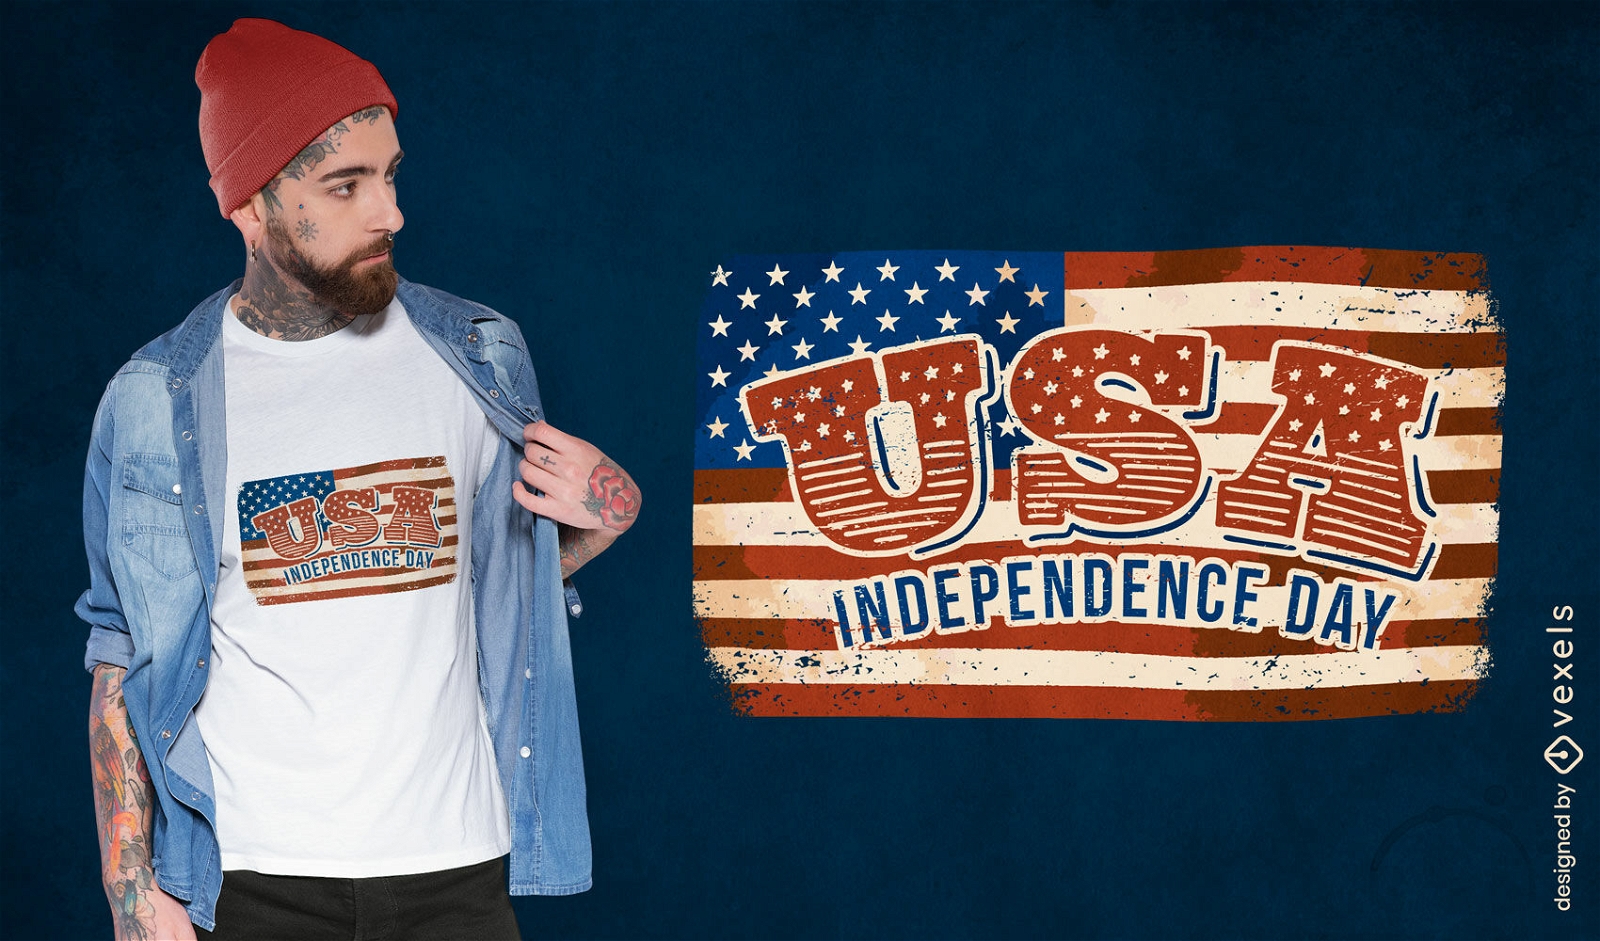 USA independence day t-shirt design